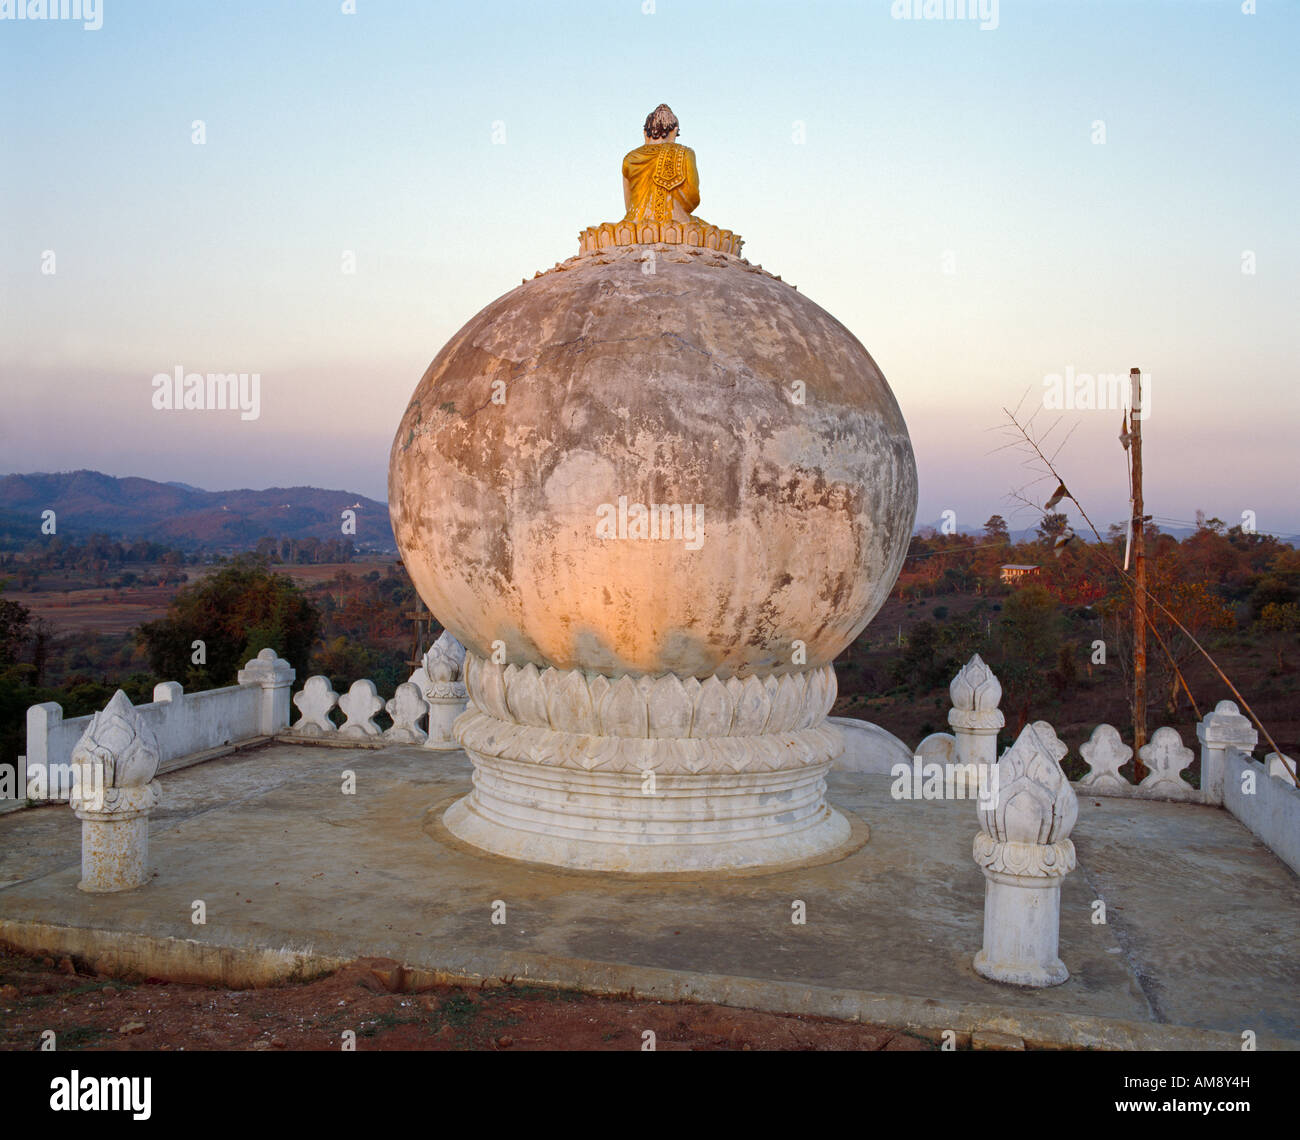 Buddhafigur Weltenkugel schaut sitzt auf und in die paisaje staue buda sentado sobre un globo mirando en el paisaje Foto de stock